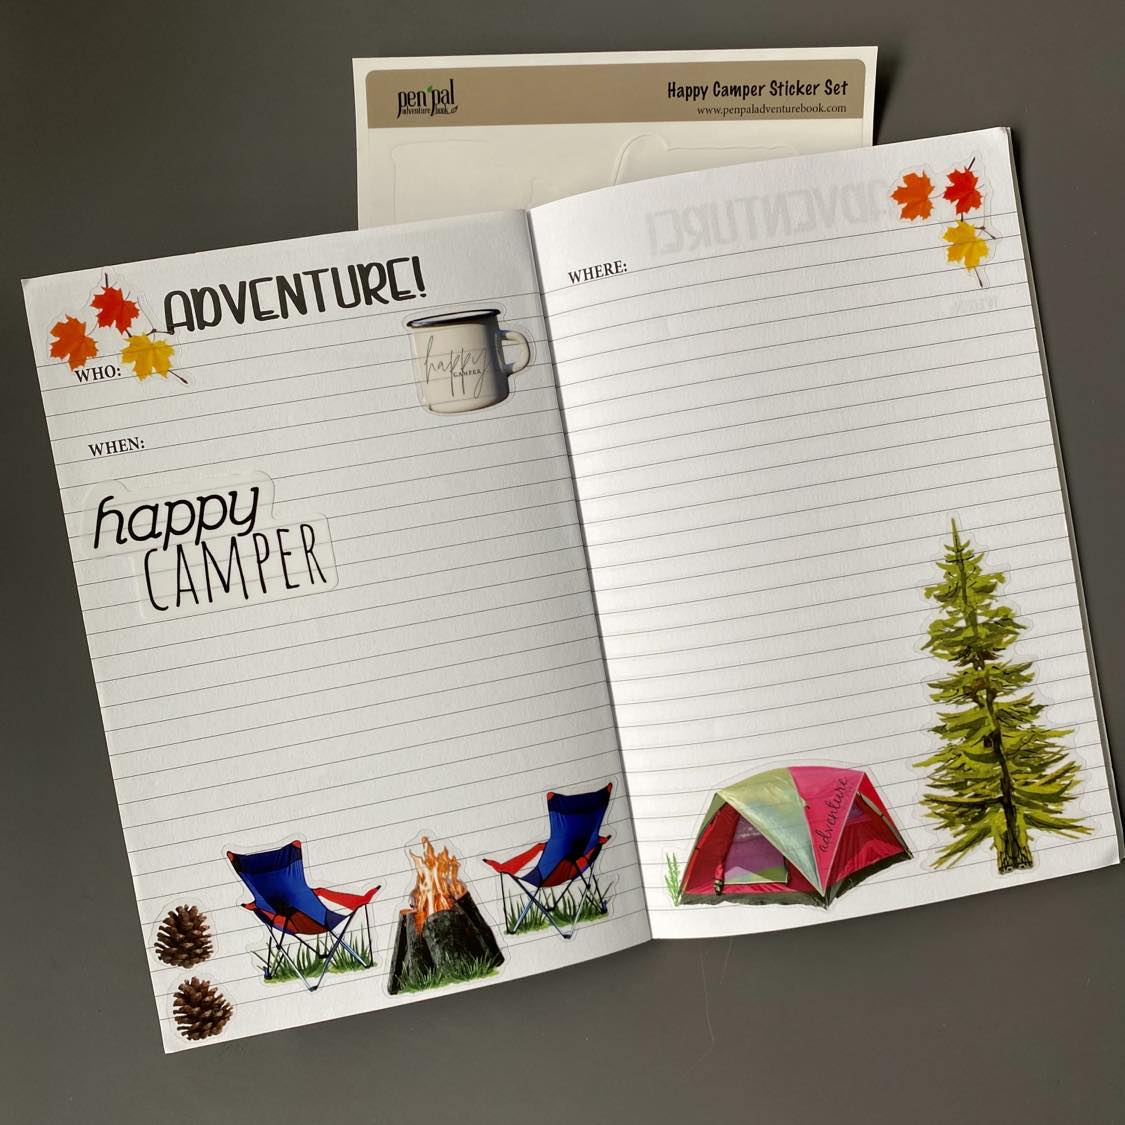 Sticker Sheet - Happy Camper Collection - Camping Die Cut Sticker Sheet - Travel Stickers